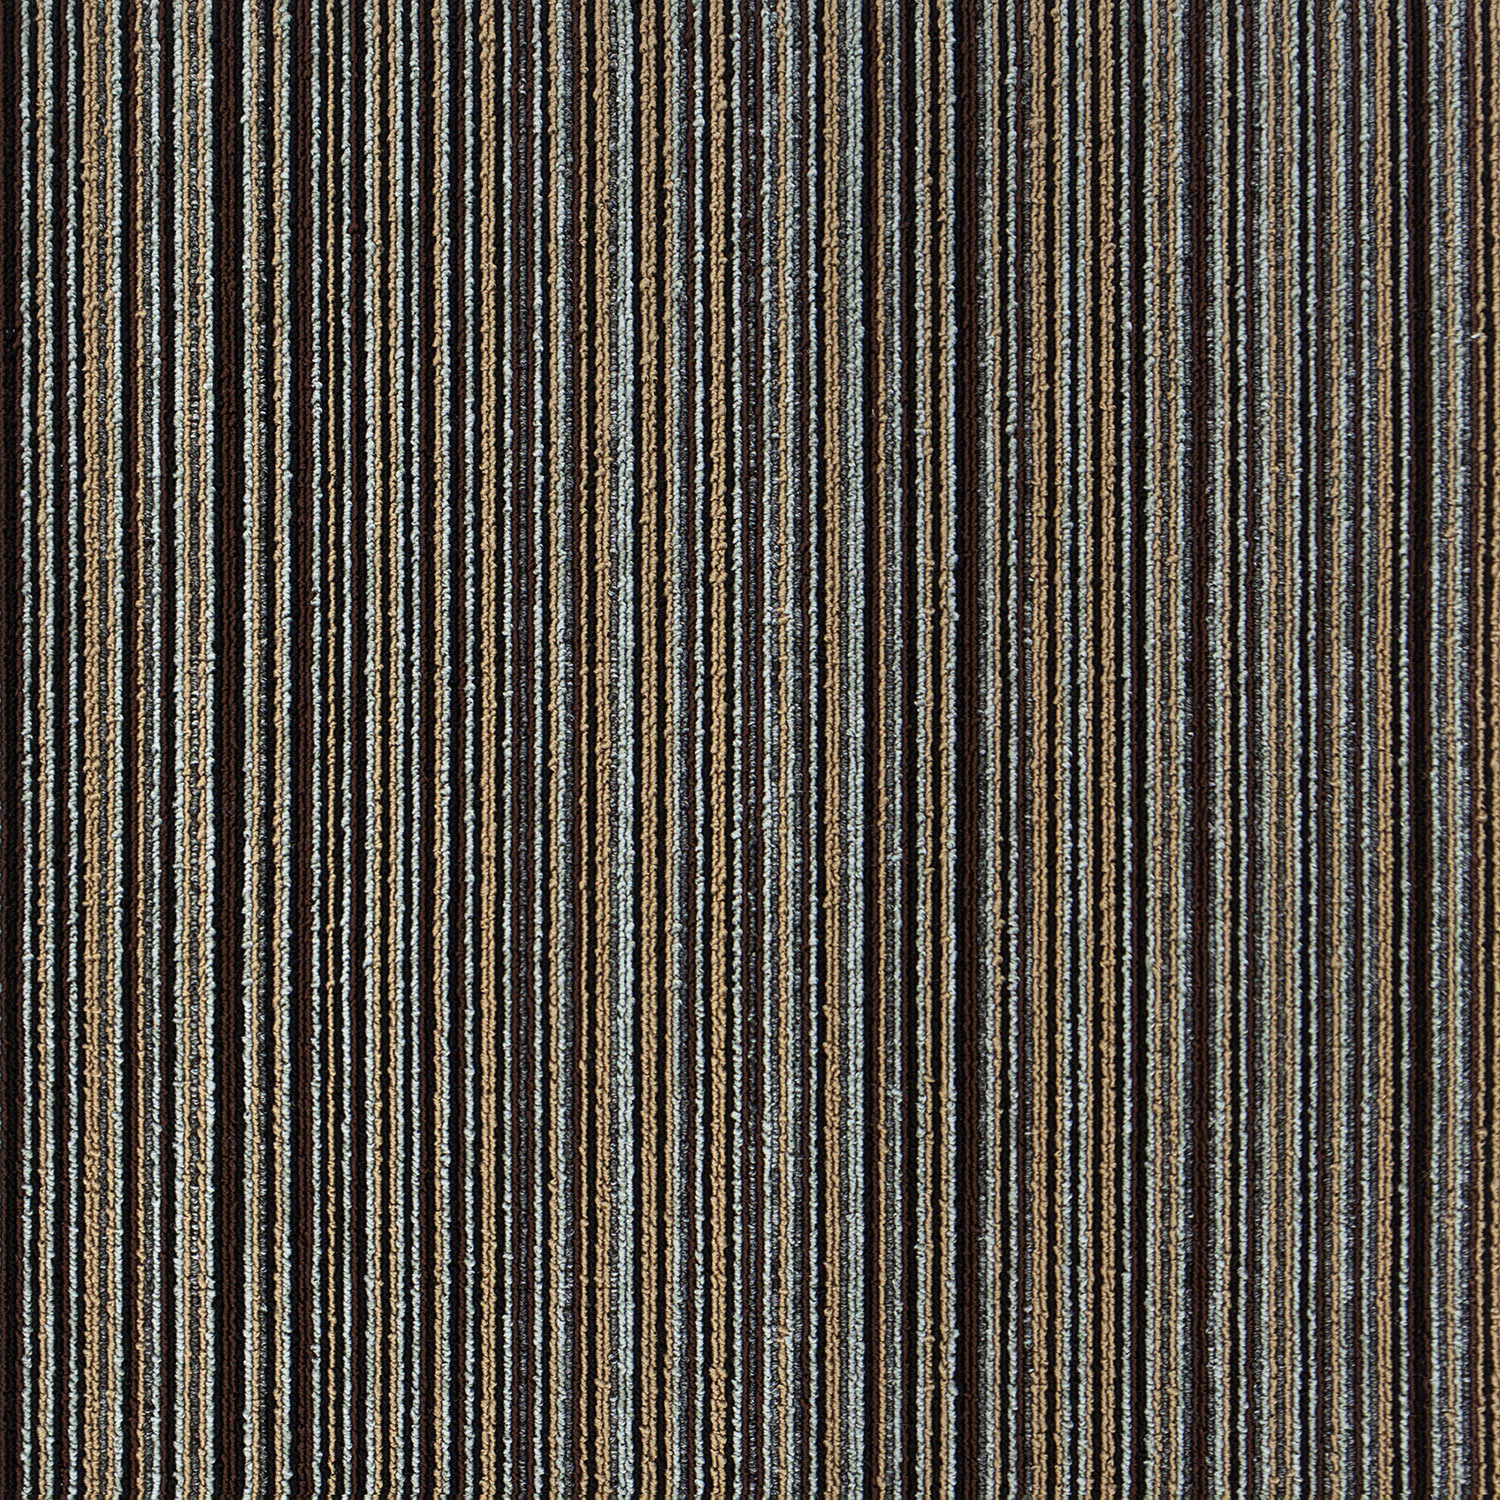 TACK211 Shanghai OEM Stain Resistant Carpet Tiles Factory